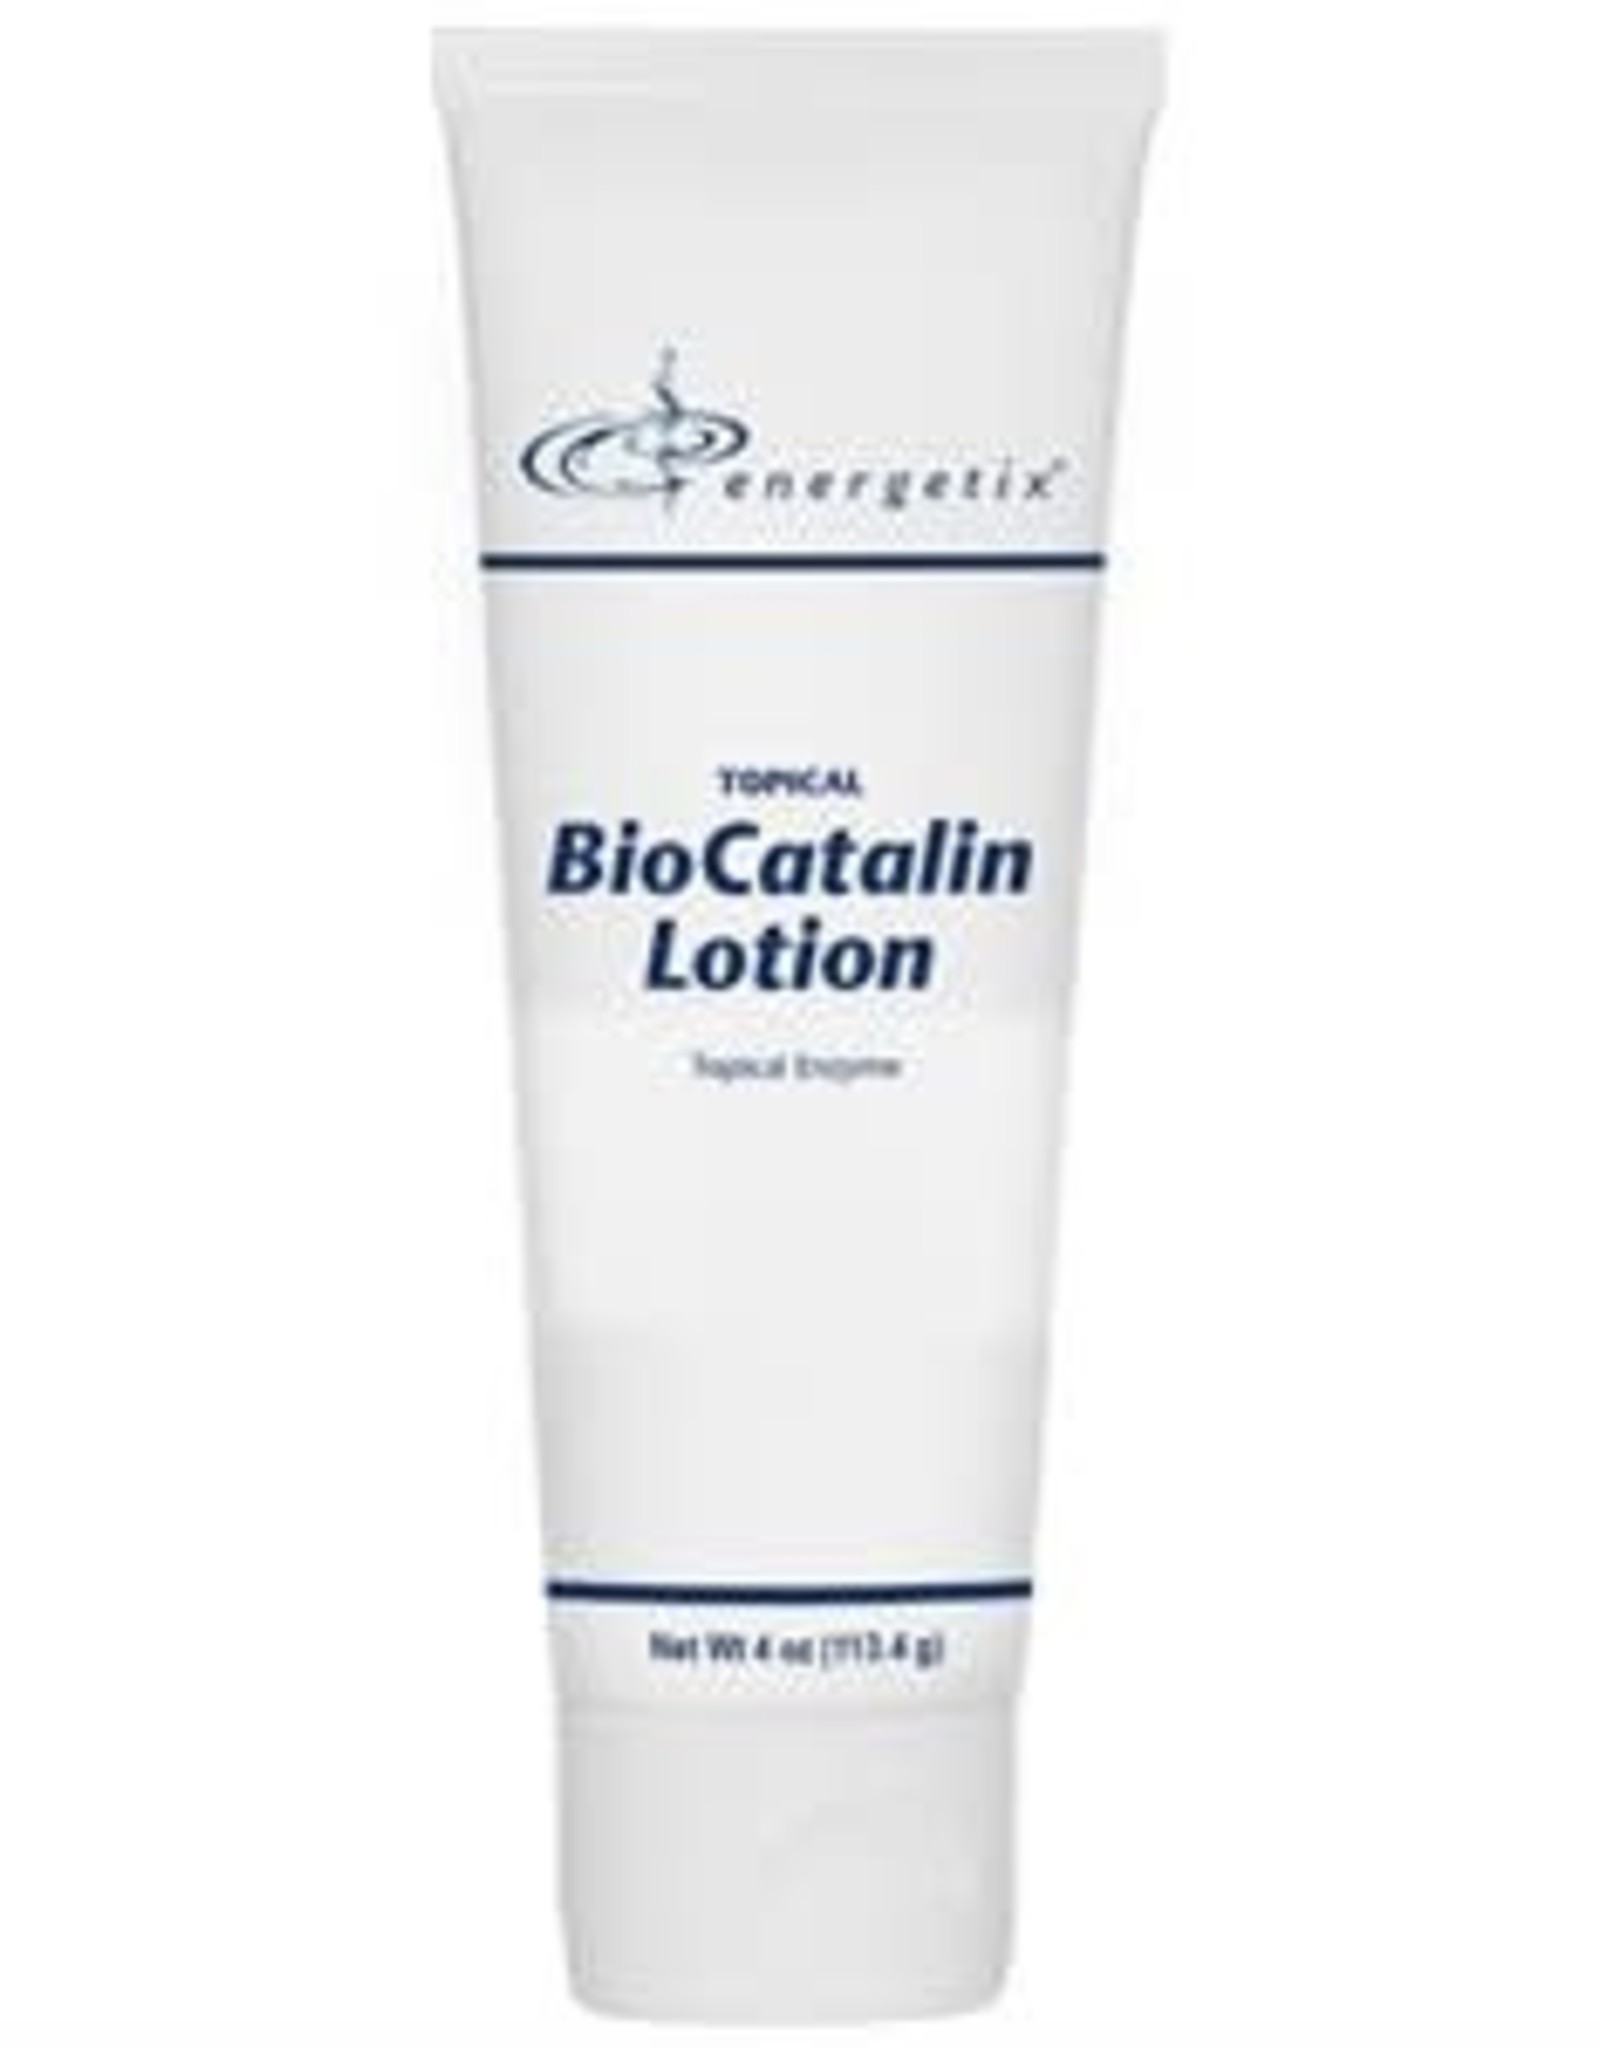 Energetix BioCatalin Lotion 4 oz.